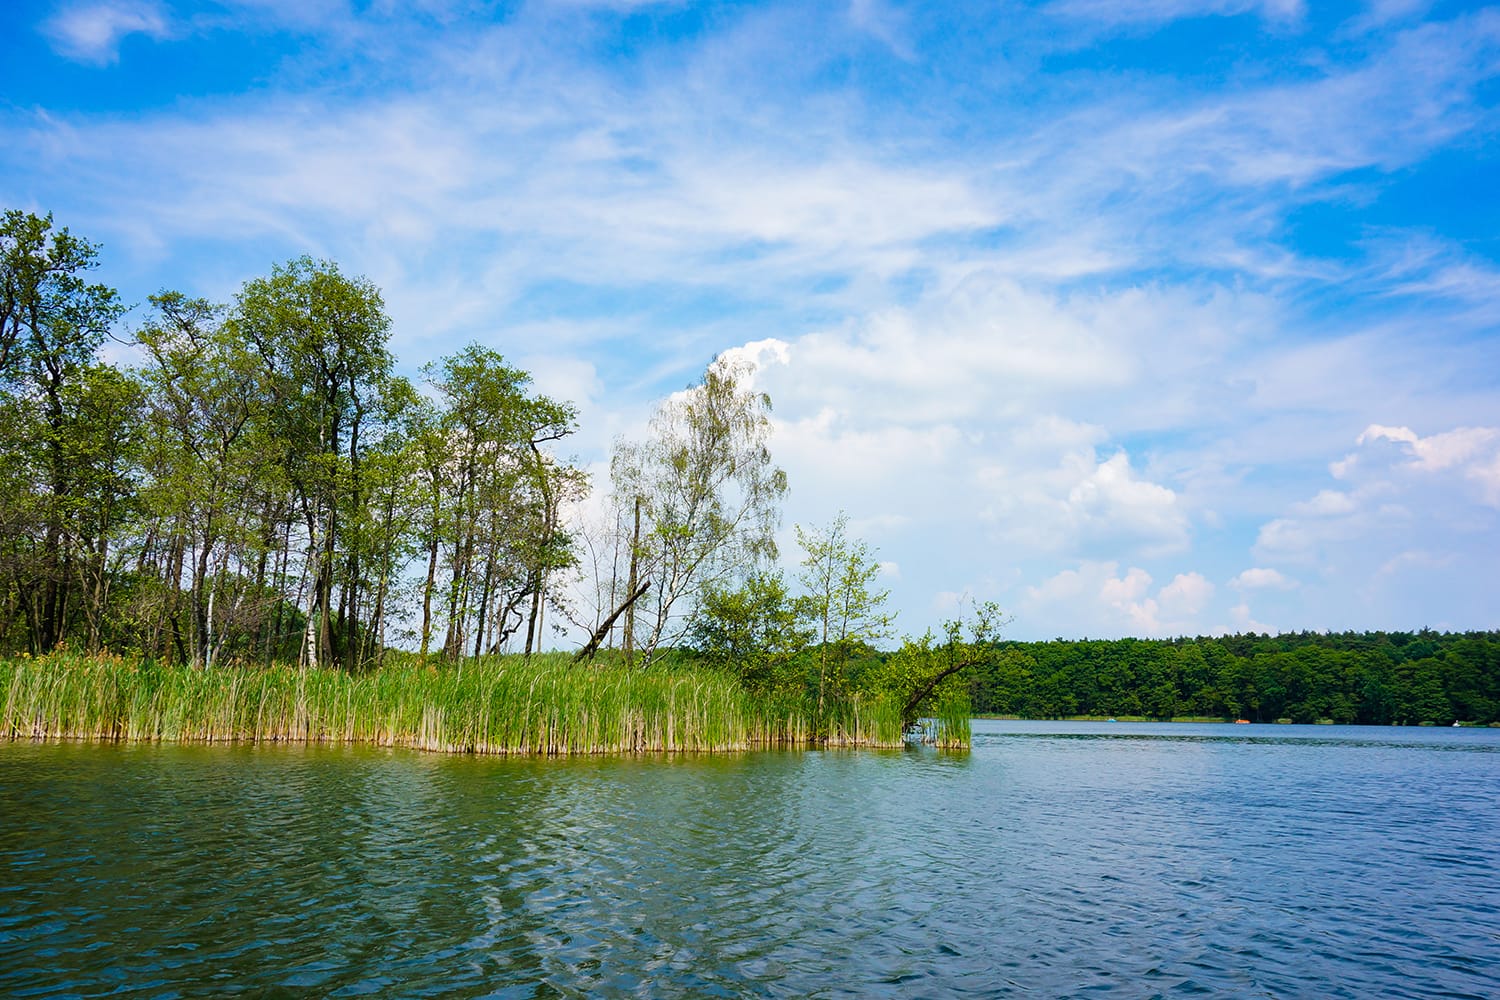 A beautiful shot of Rusalka lake in Poznan, Poland